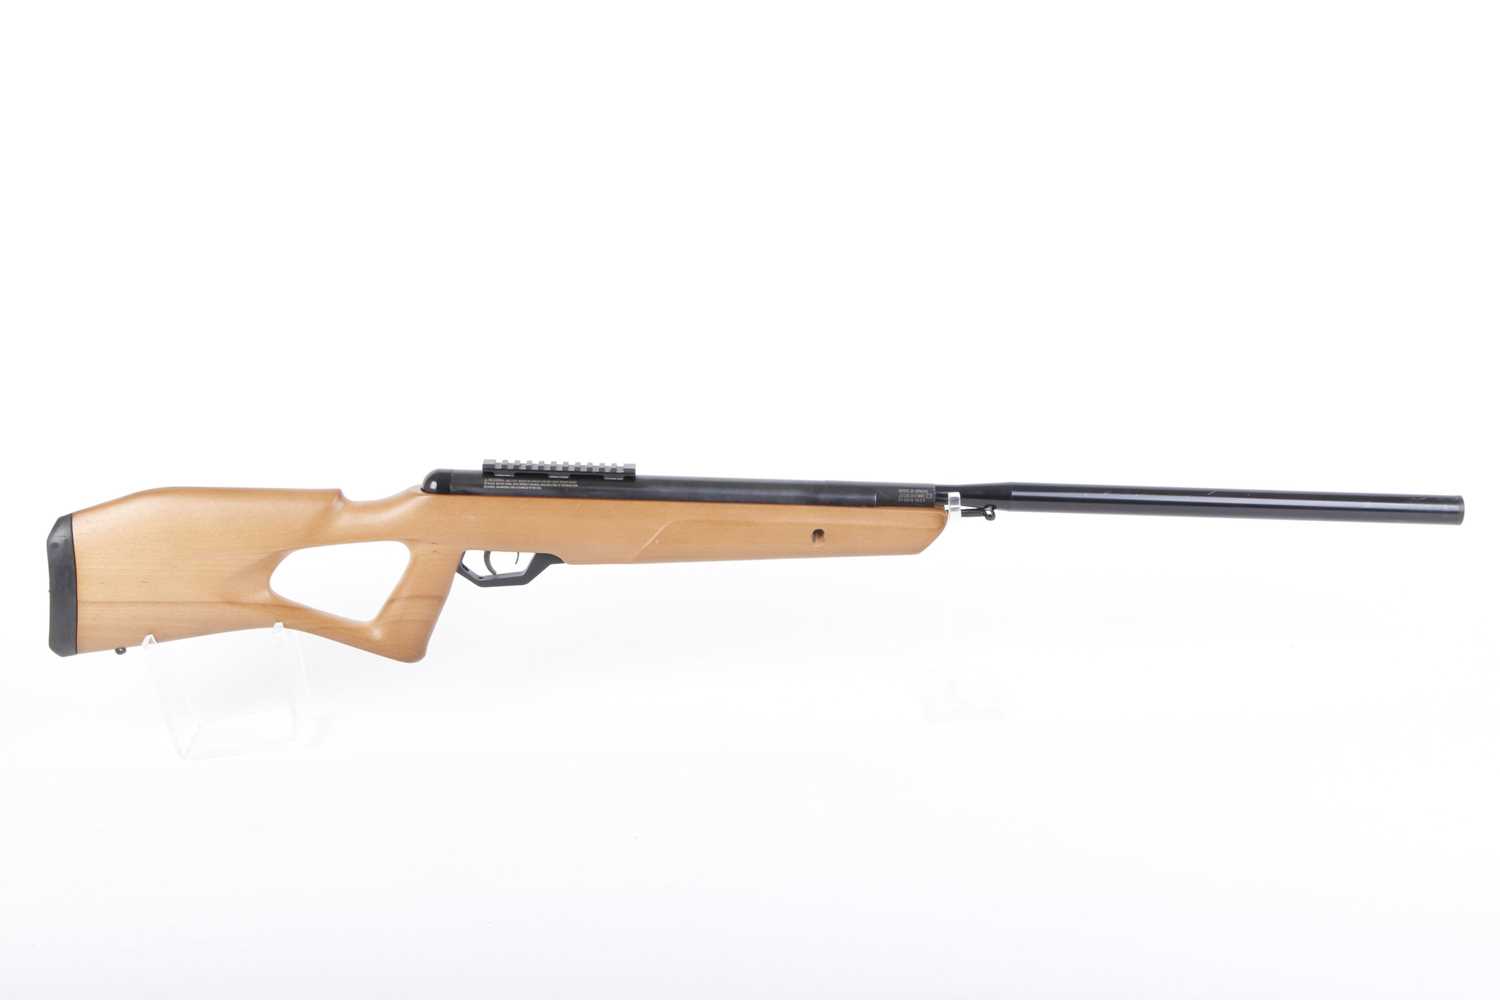 .22 Benjamin Trail break-barrel air rifle, tube mounted weaver scope rail, pistol grip stock with